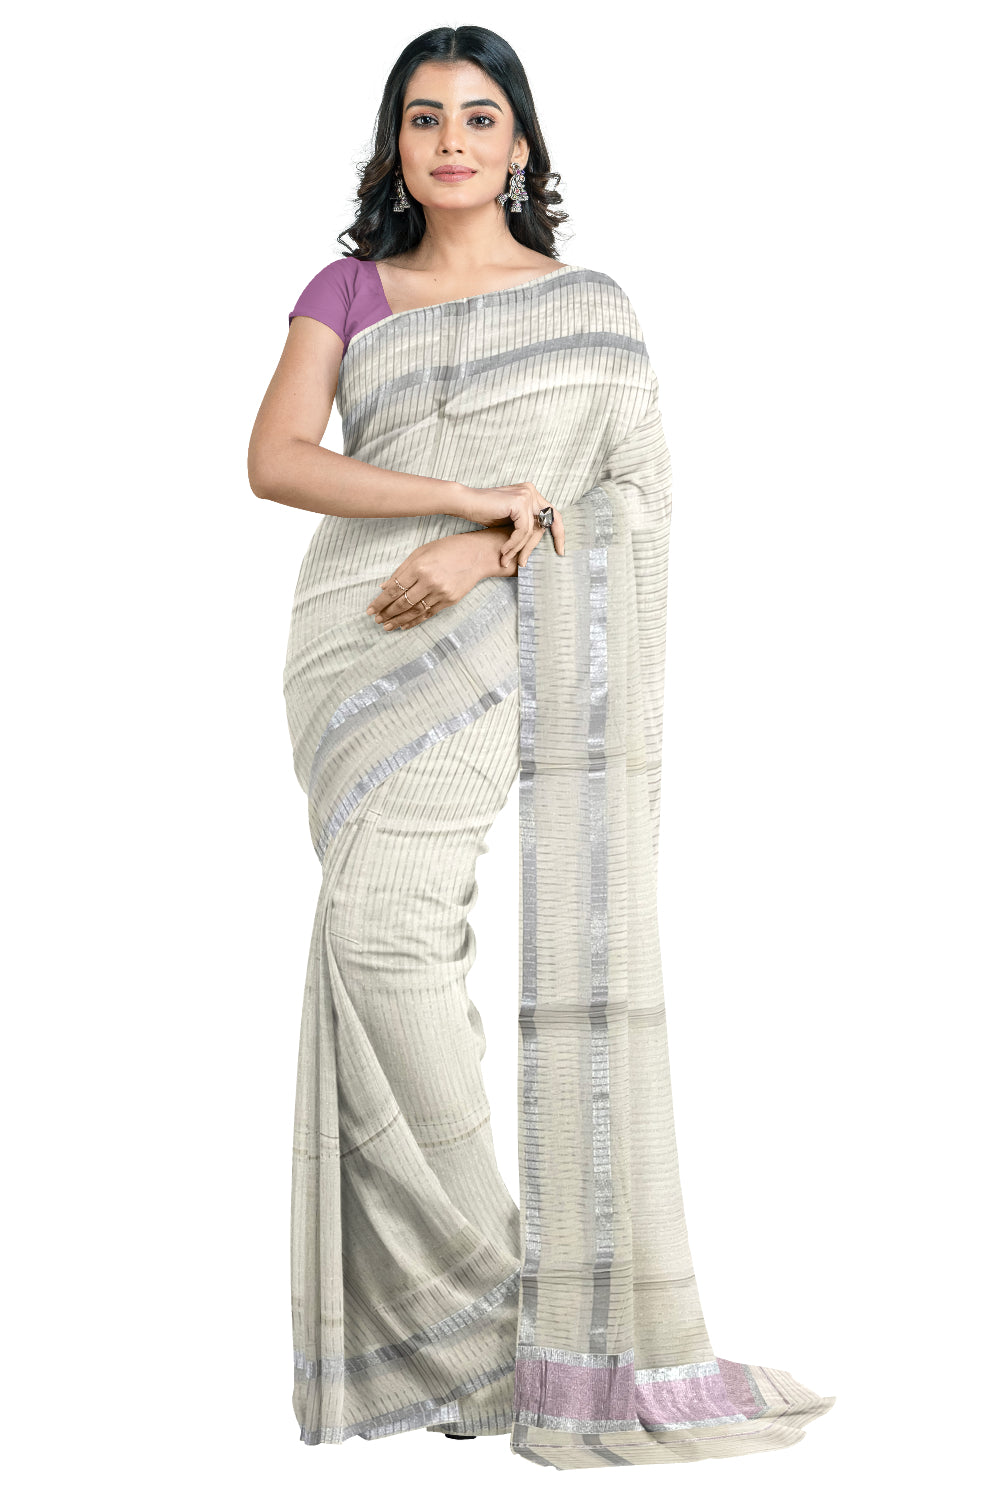 Pure Cotton Kerala Saree with Silver and Light Pink Kasavu Lines Across Body